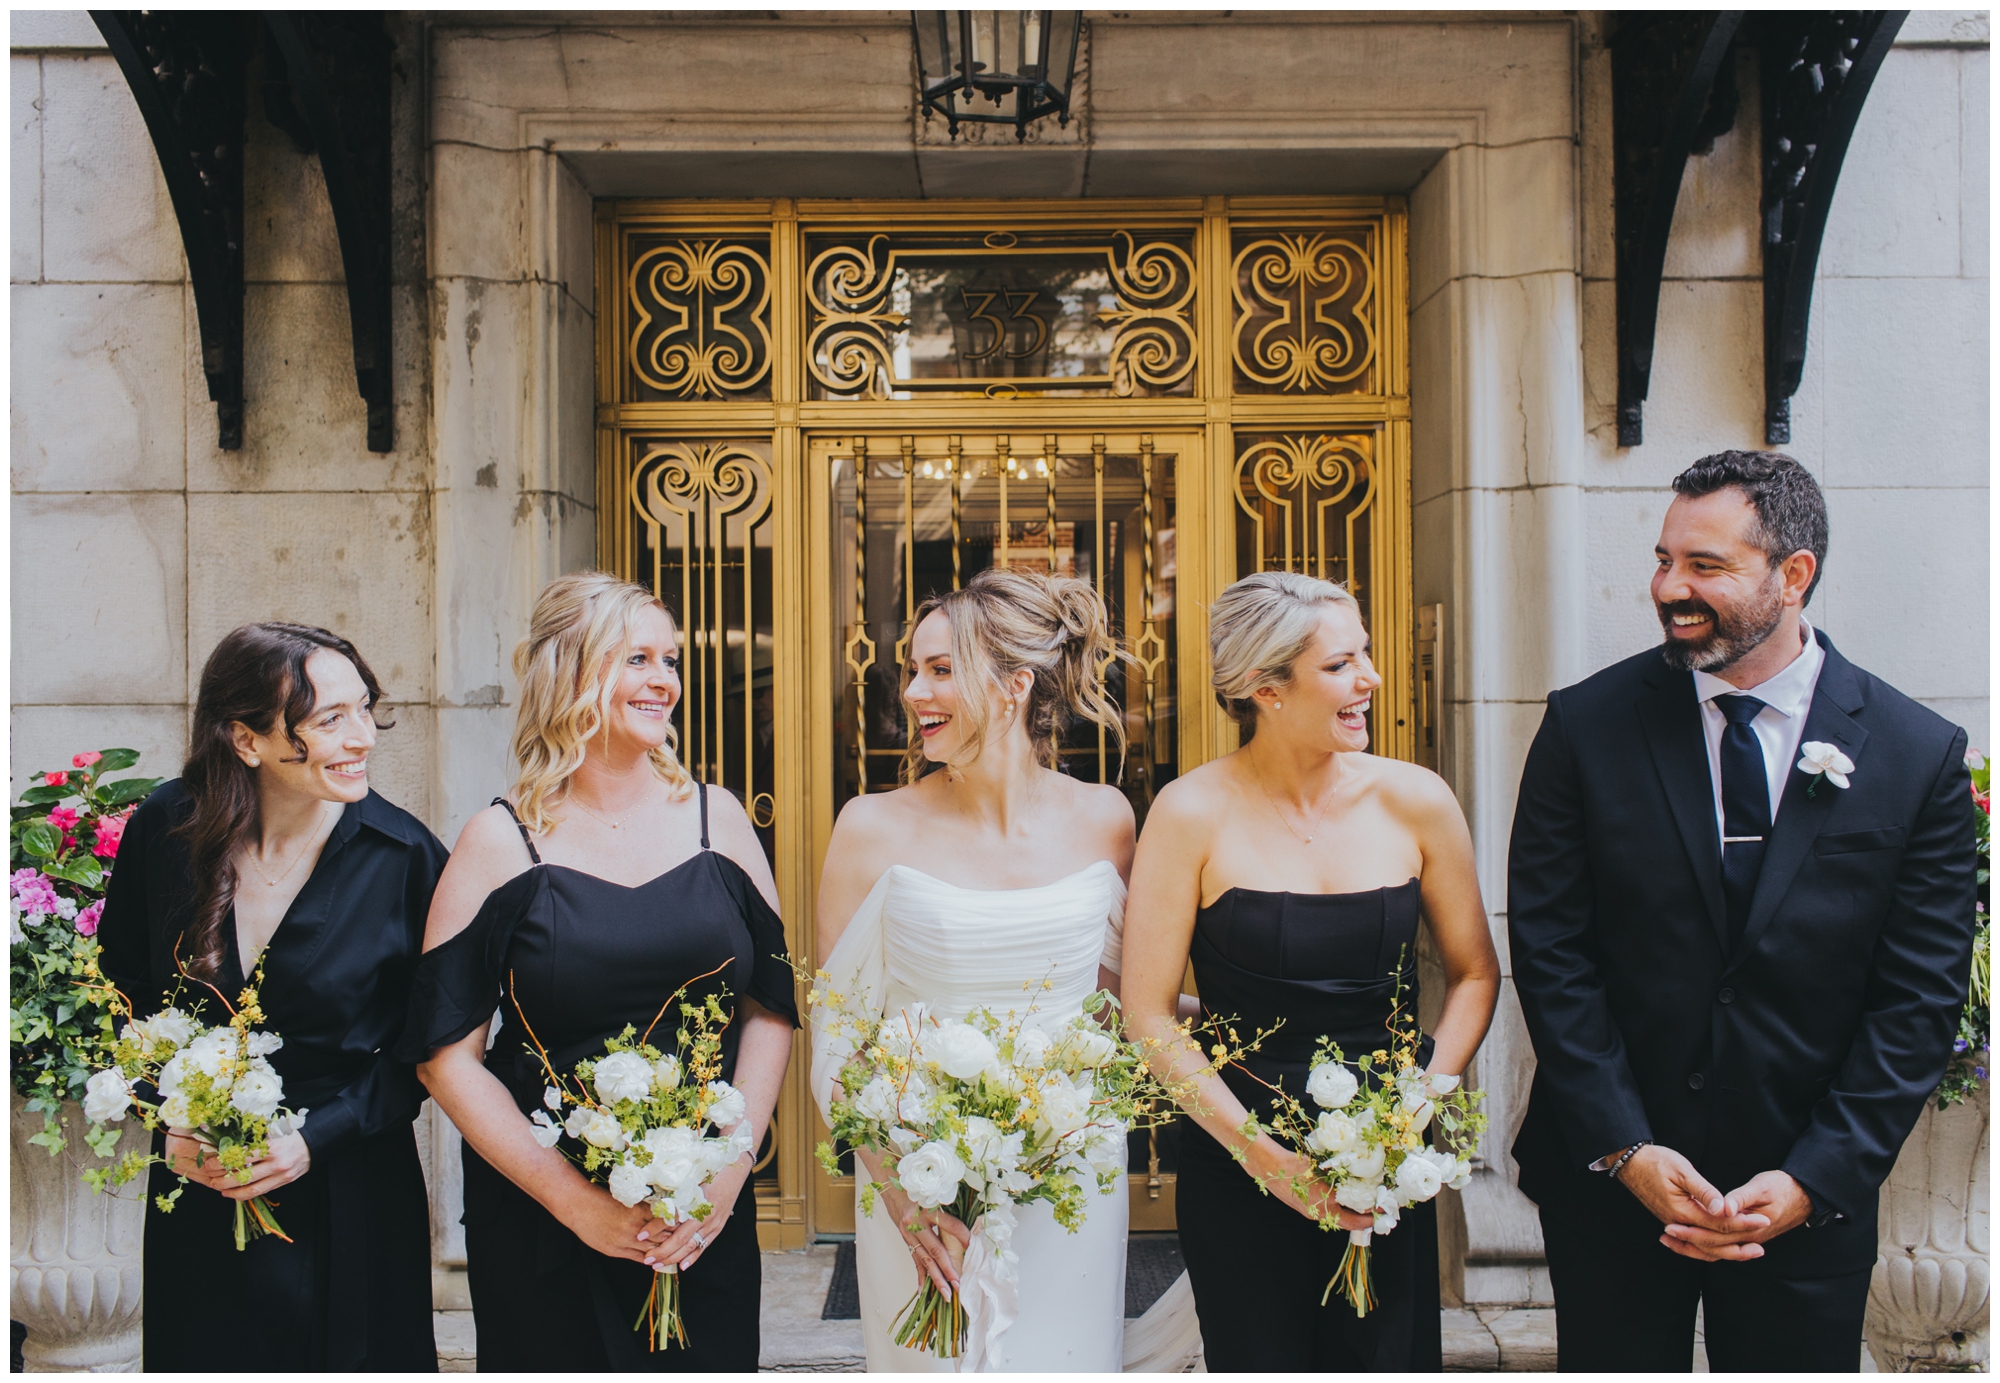 Greenhouse Loft Chicago wedding receptions; wedding photography by Meg Adamik